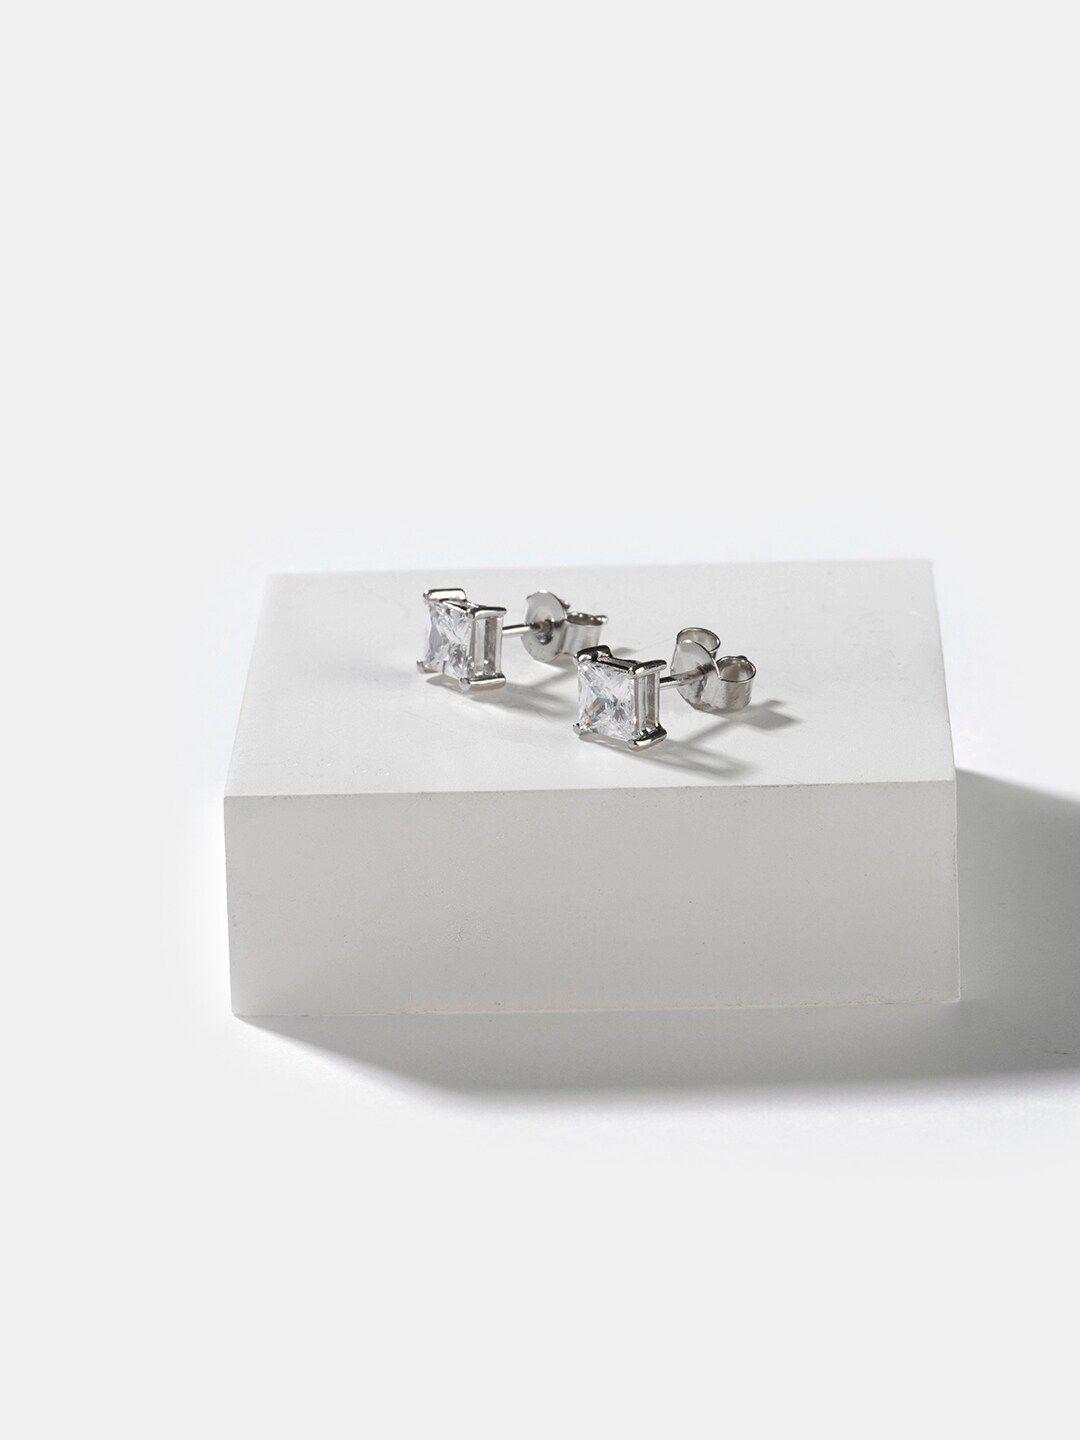 shaya 925 silver cz square studs earrings